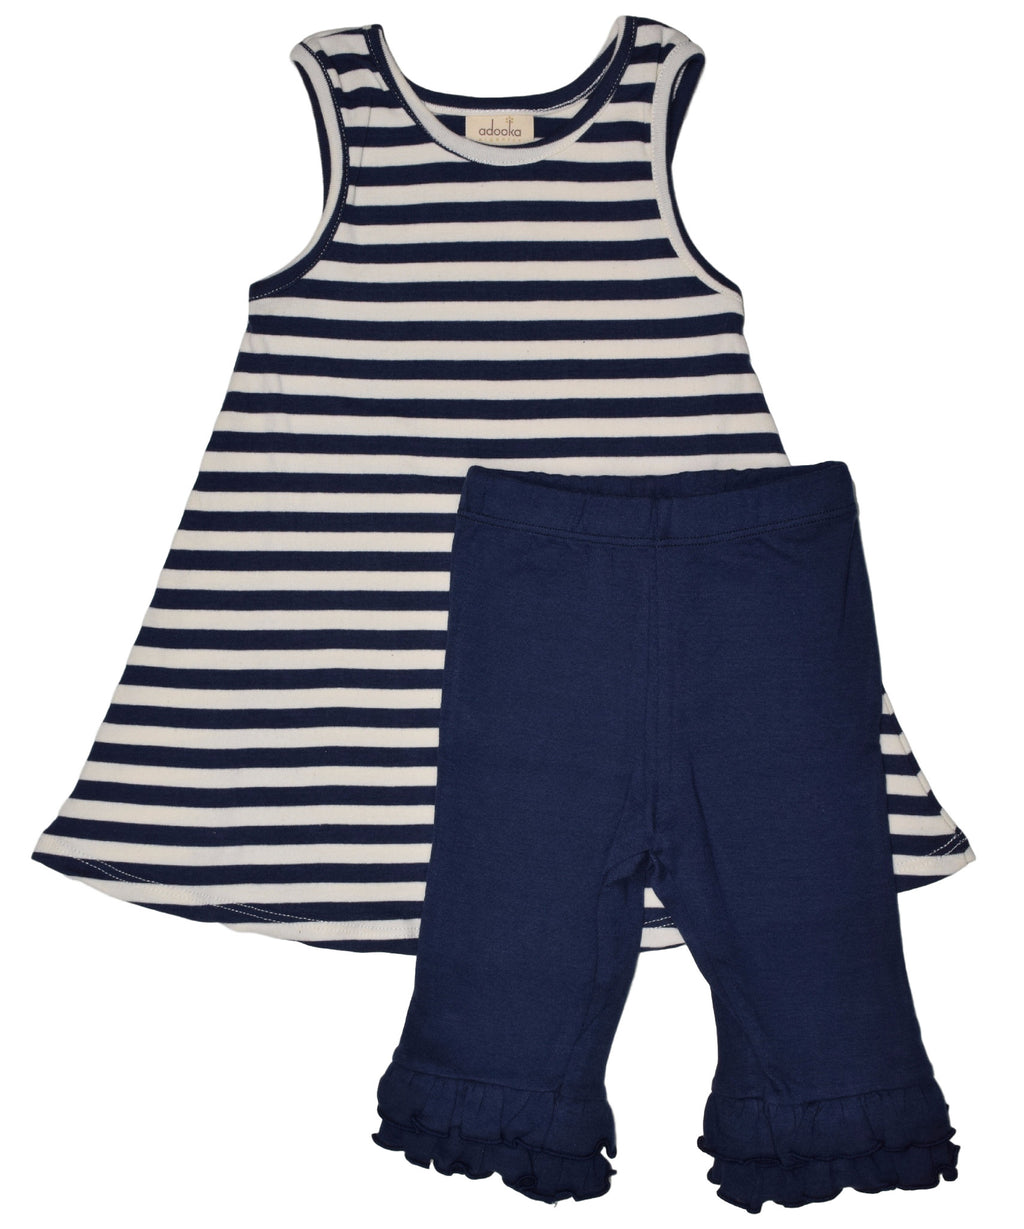 Joyful stripe tunic+capri set